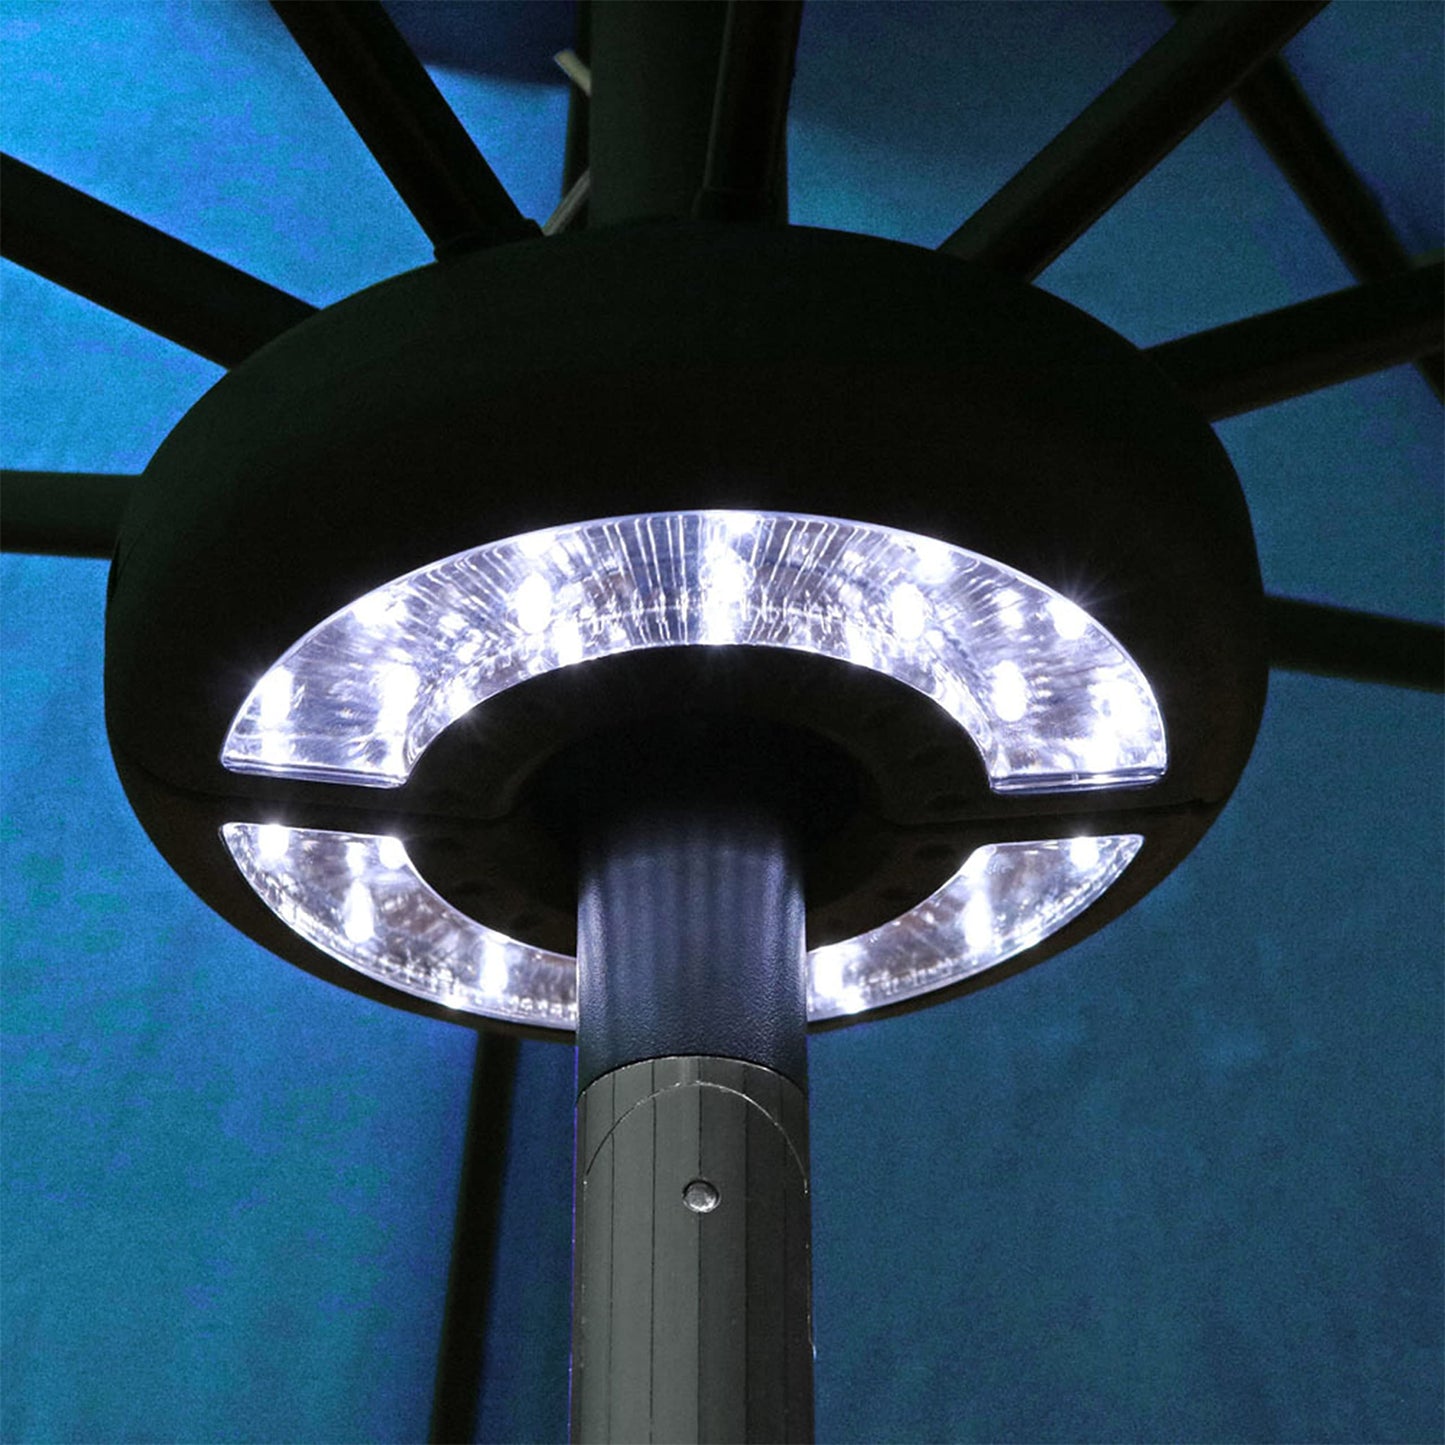 Sunnydaze 24-LED Umbrella Lights 2-Panel Cordless Light Ring for Patio Umbrellas - Battery Operated - Black